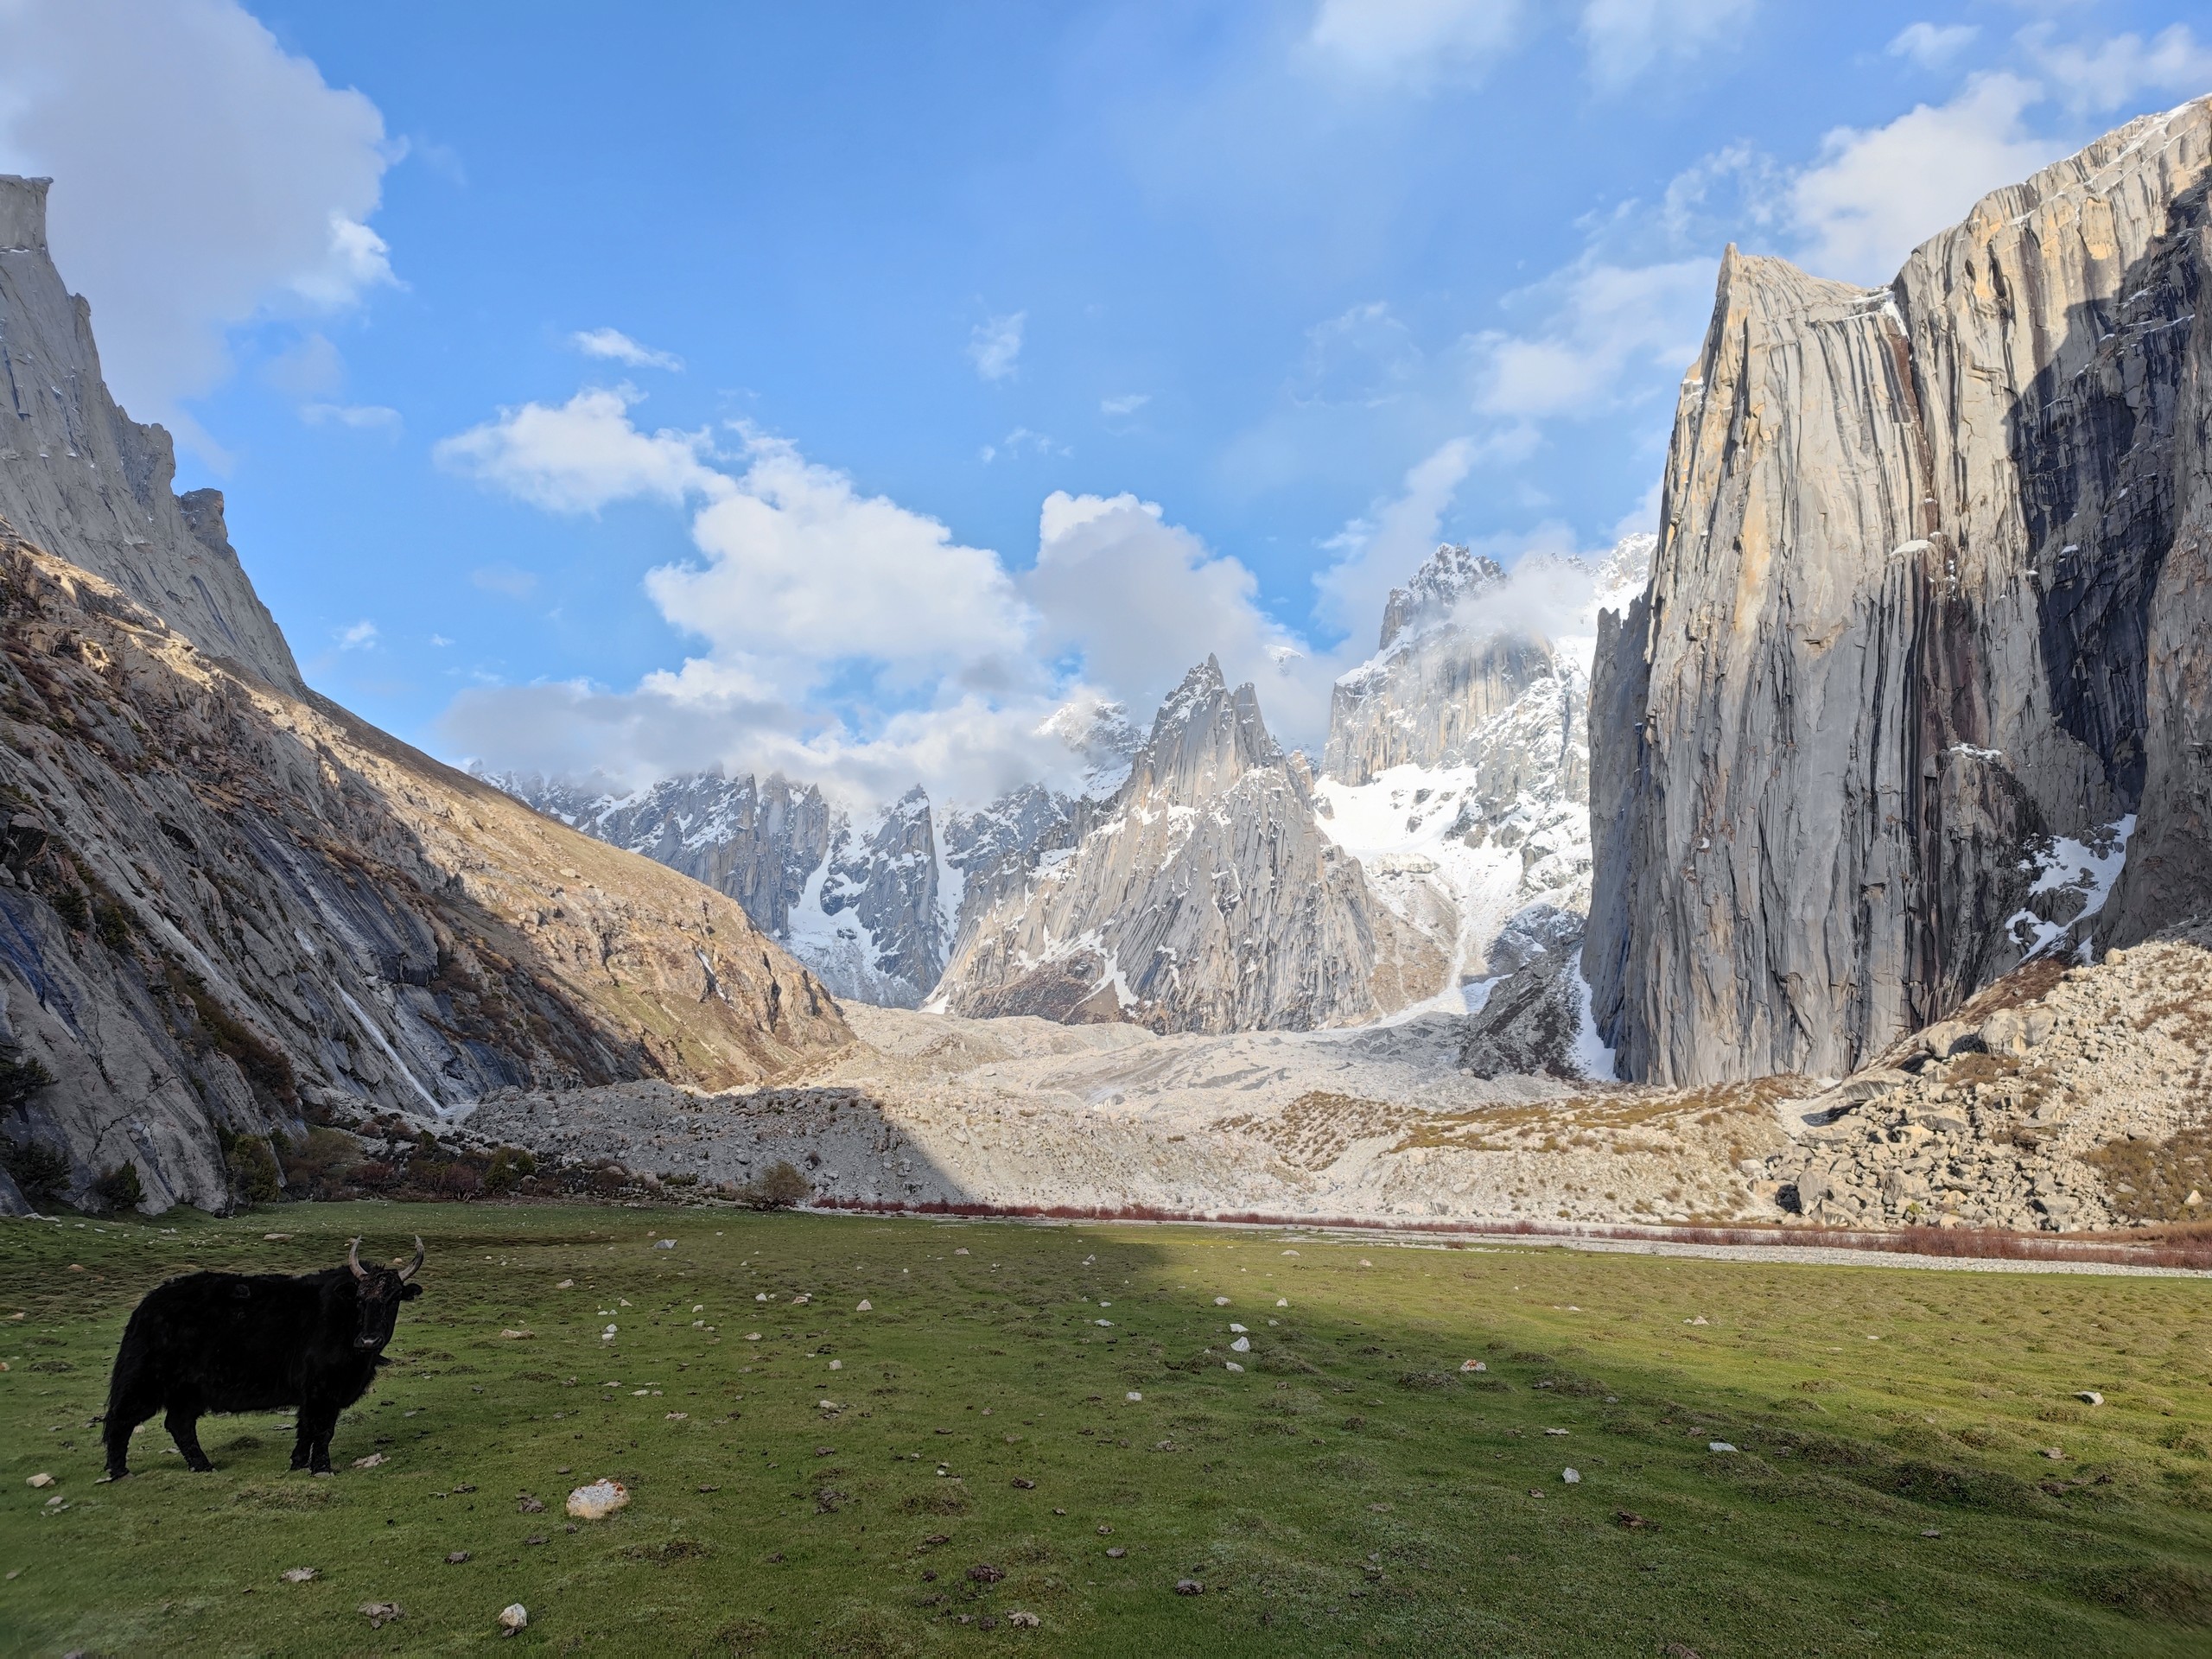 Nangma Valley in Pakistan